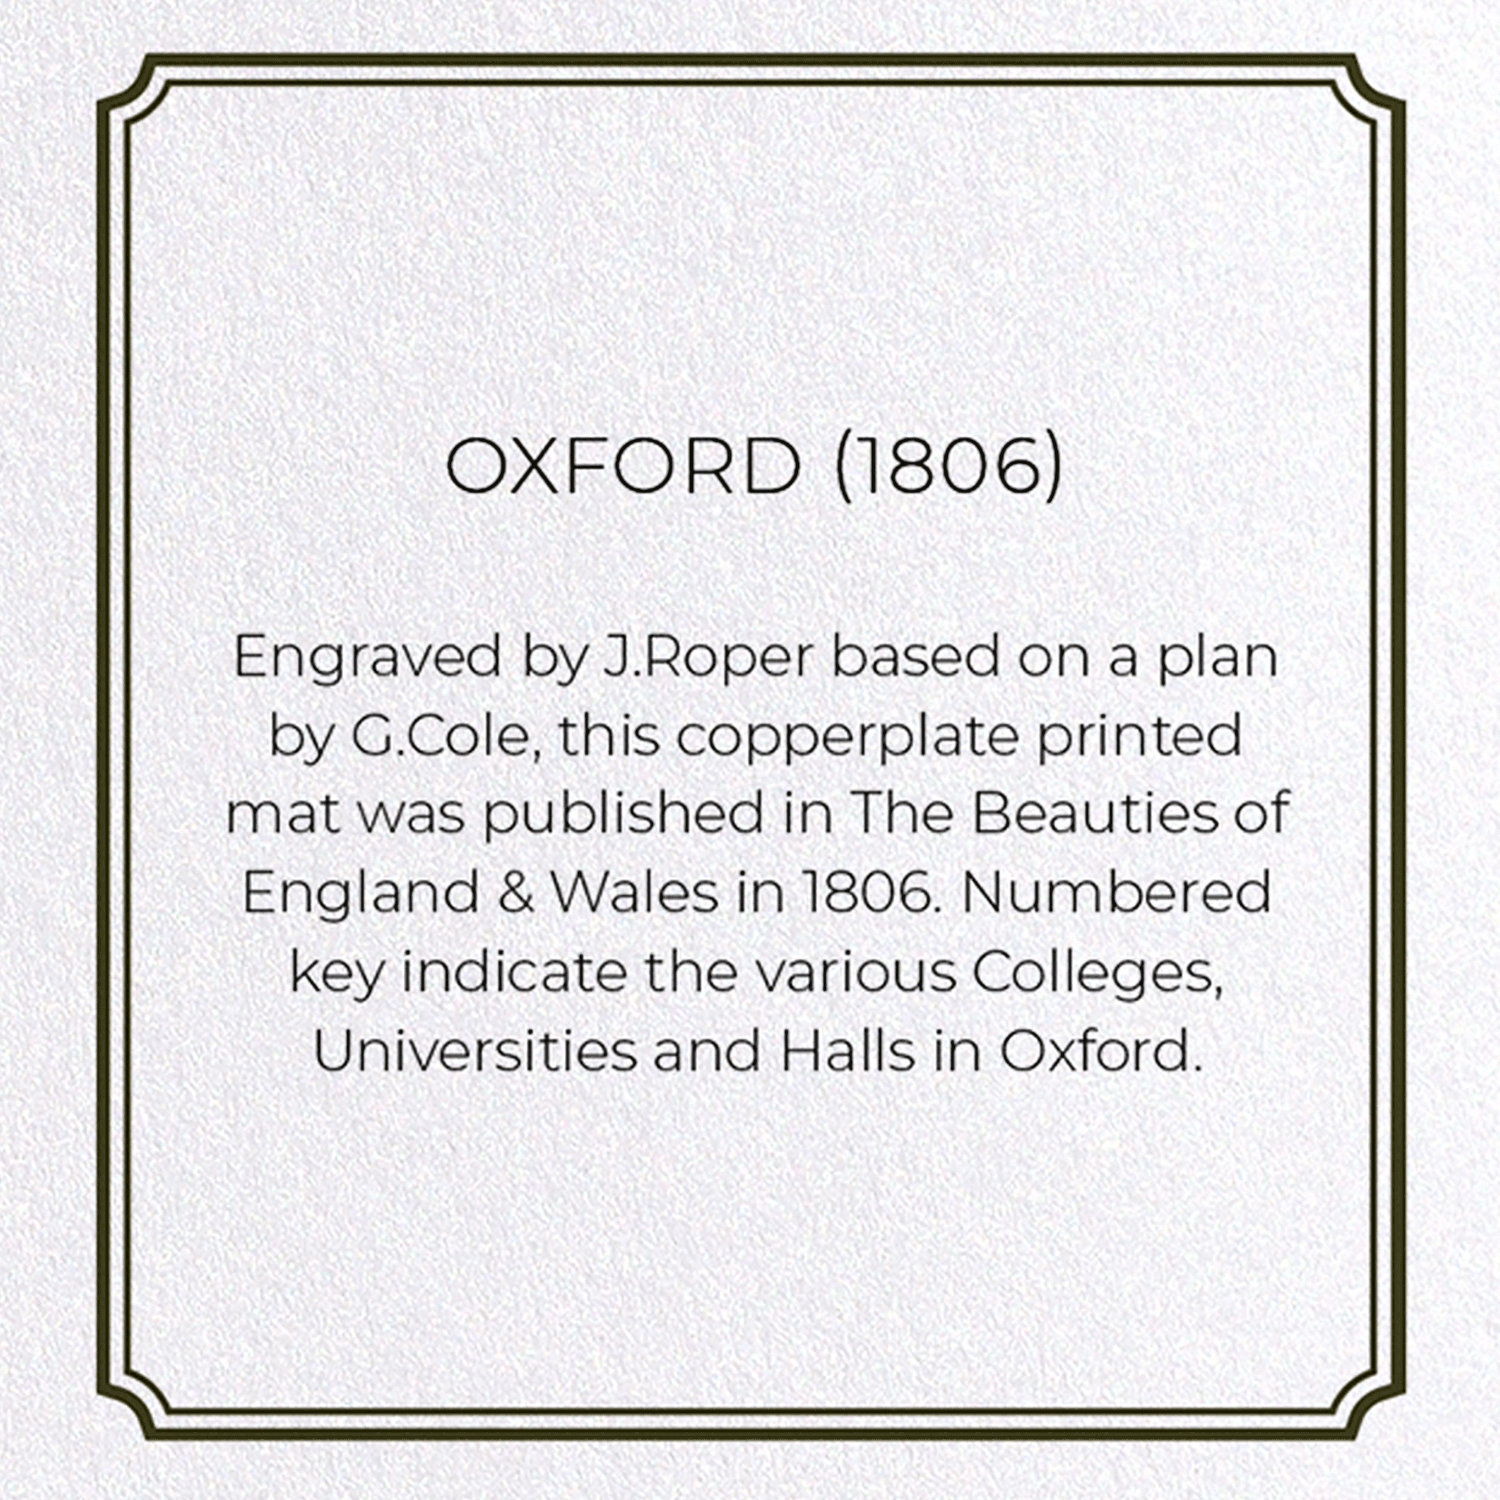 OXFORD (1806)